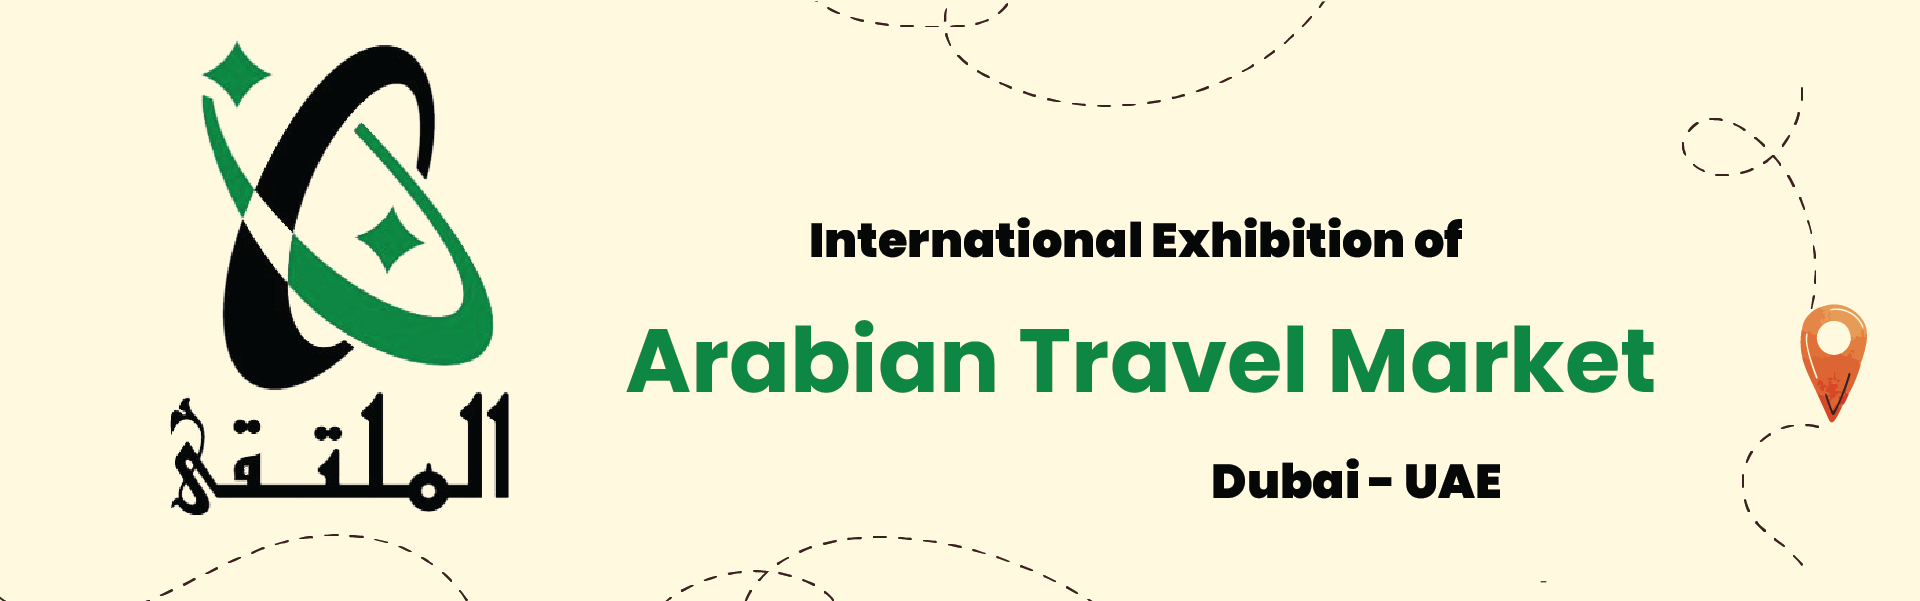 Arabian Travel Market Exhibition Dubai United Arab Emirates